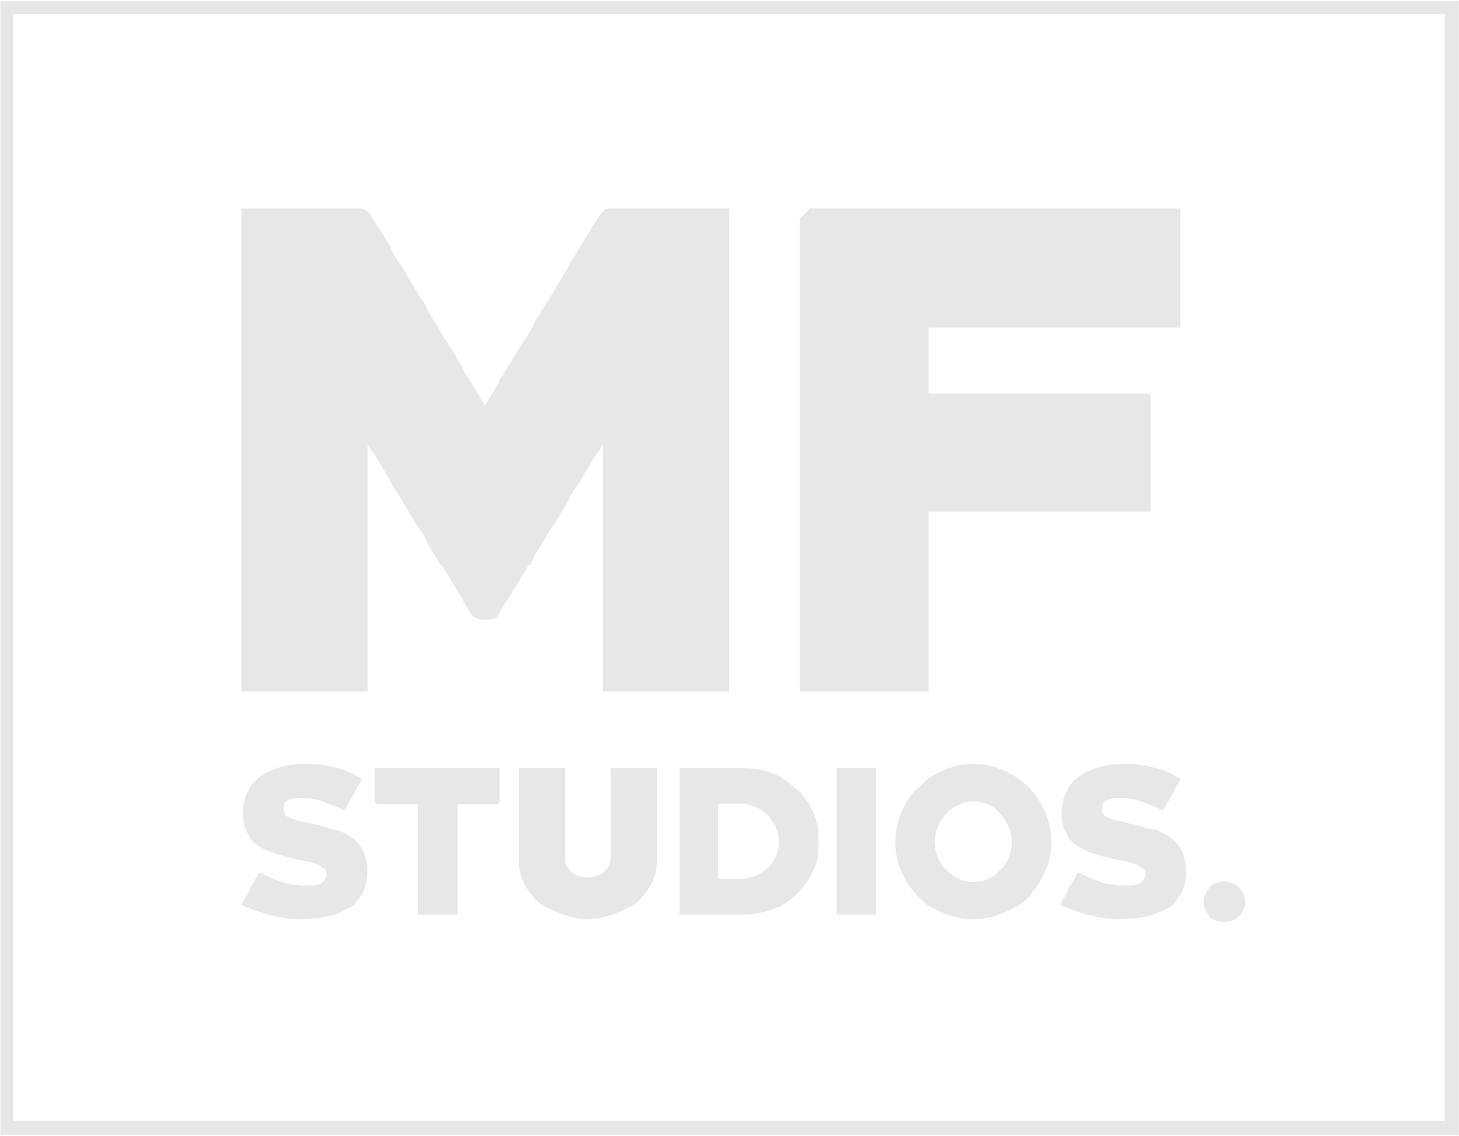 MF Studios